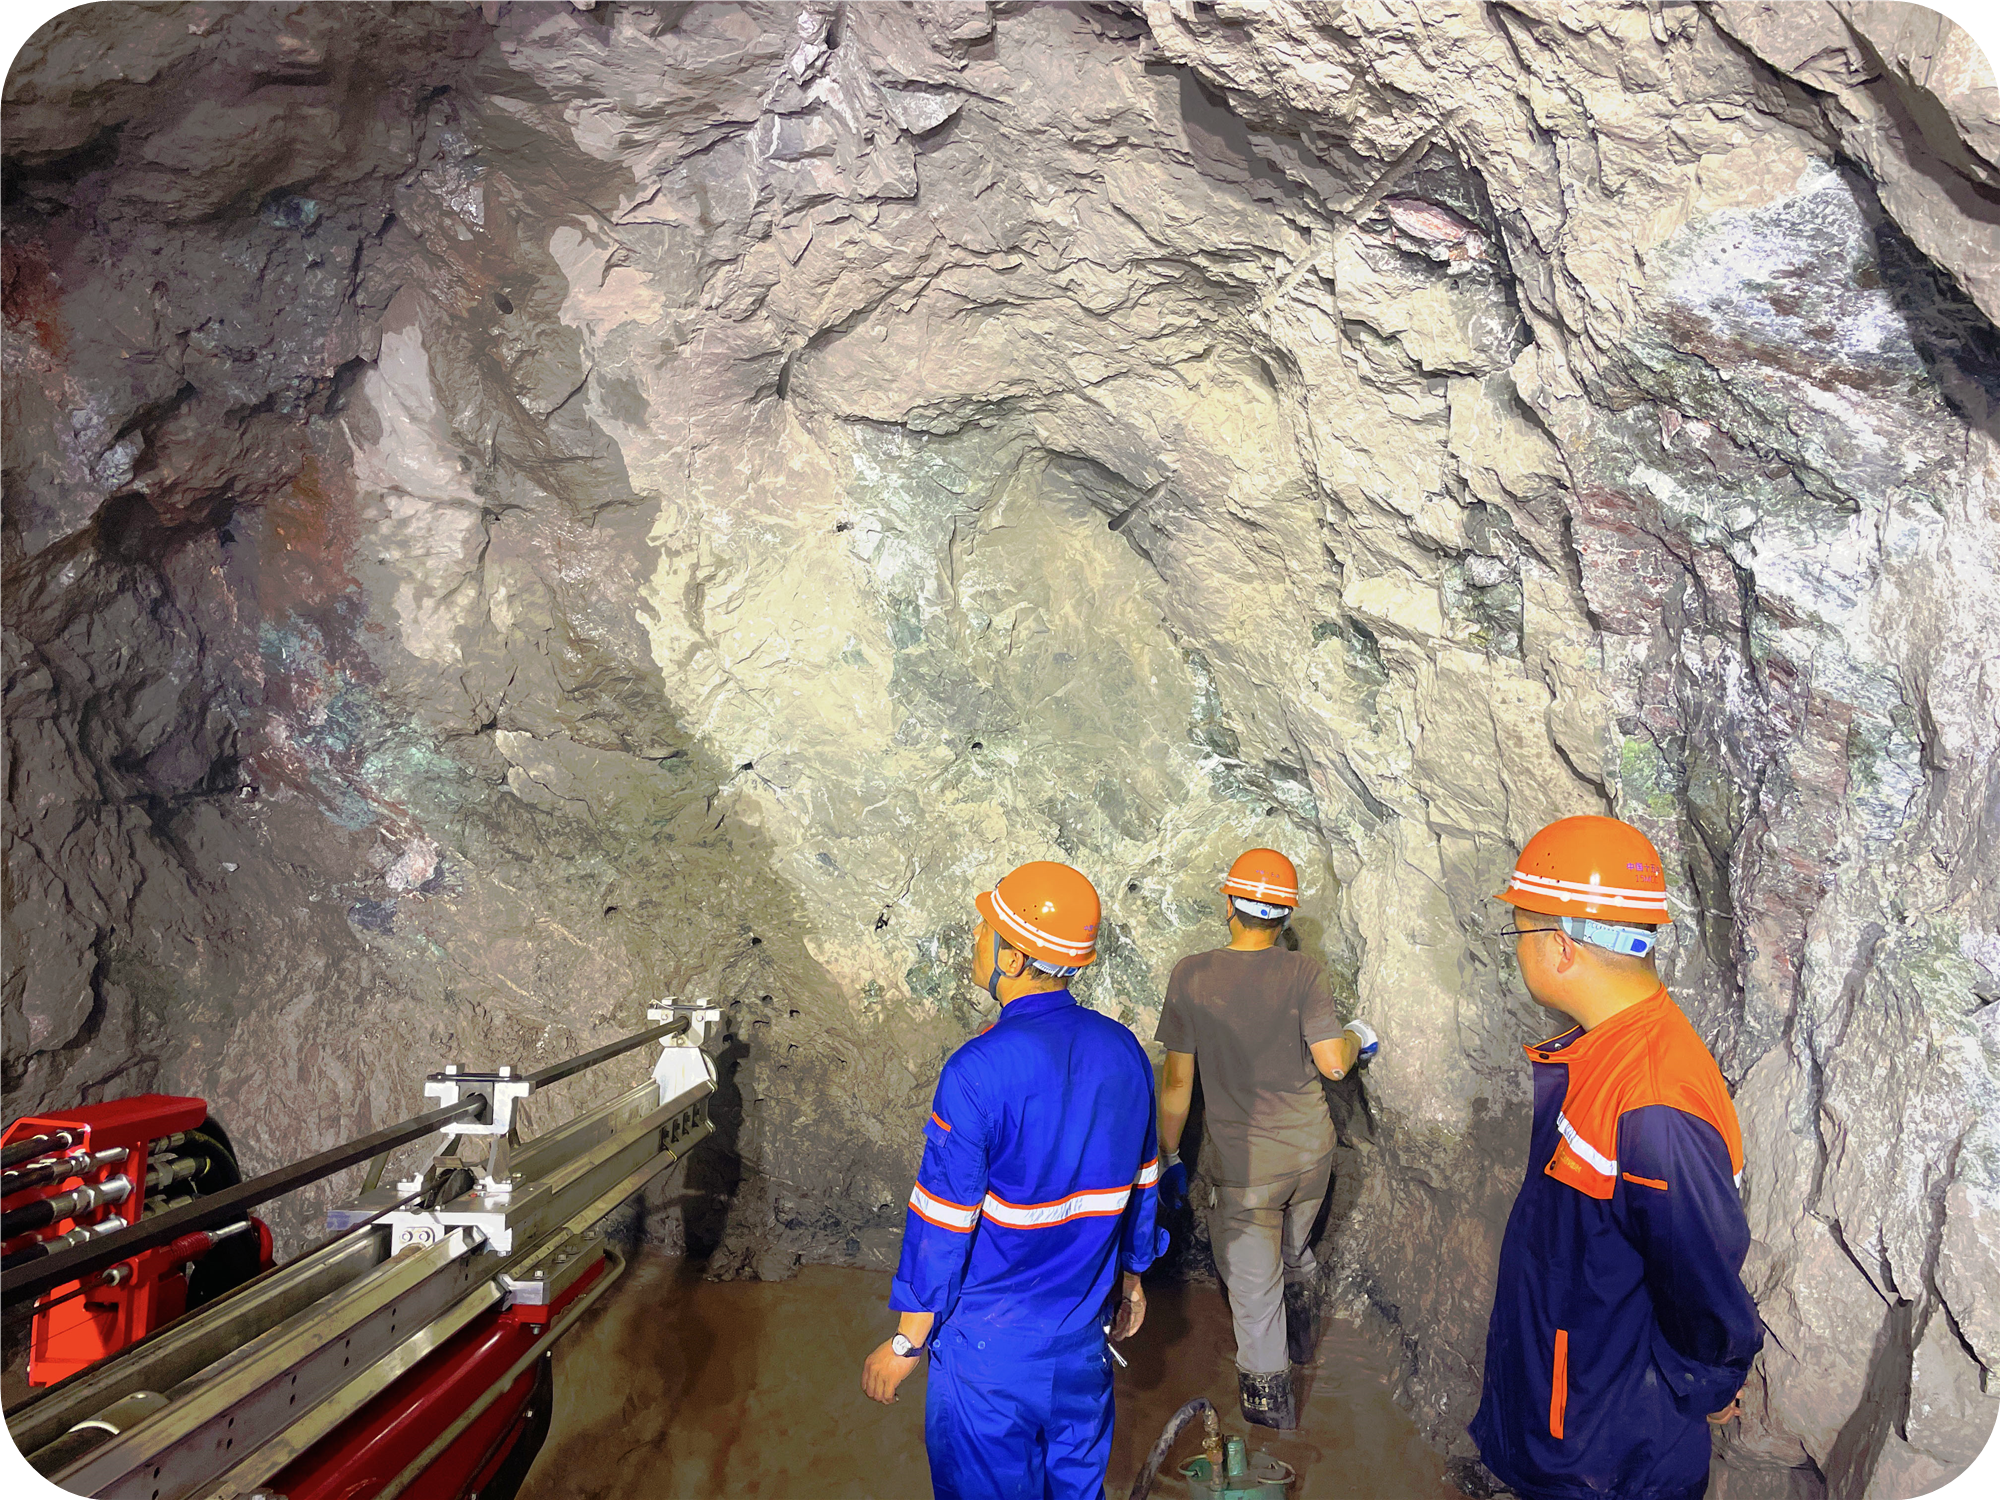 Undergound mining drilling rig case